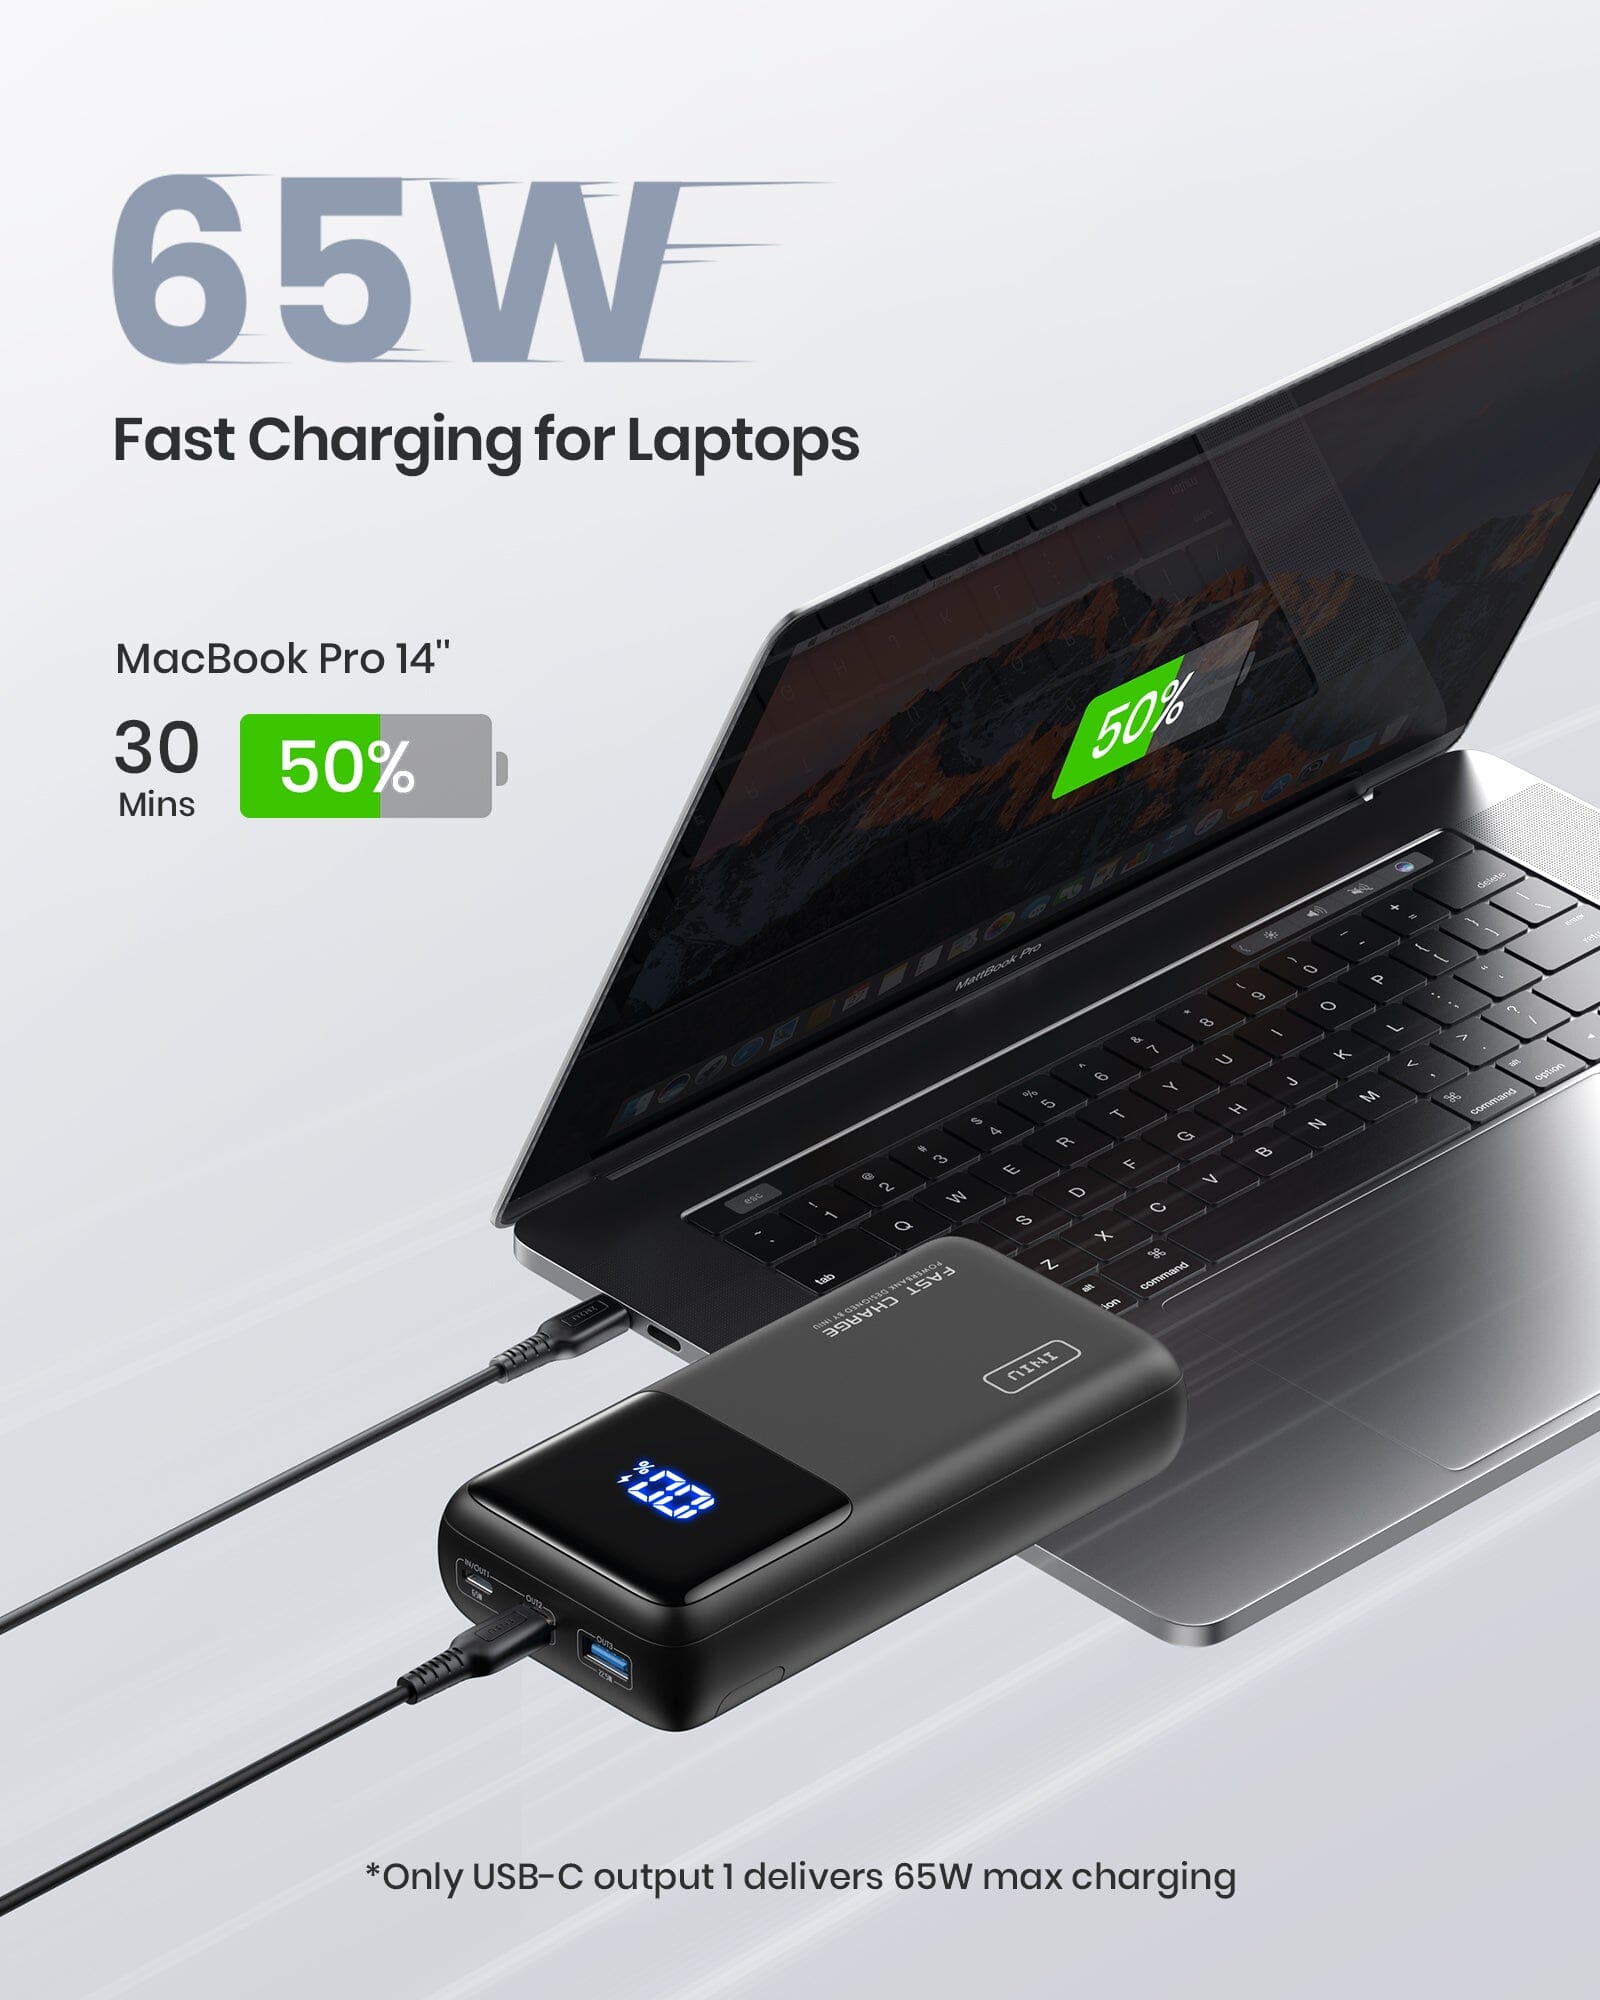 INIU Power Bank B63 (25000mAh)  Portable Charger for Laptop,Ipad